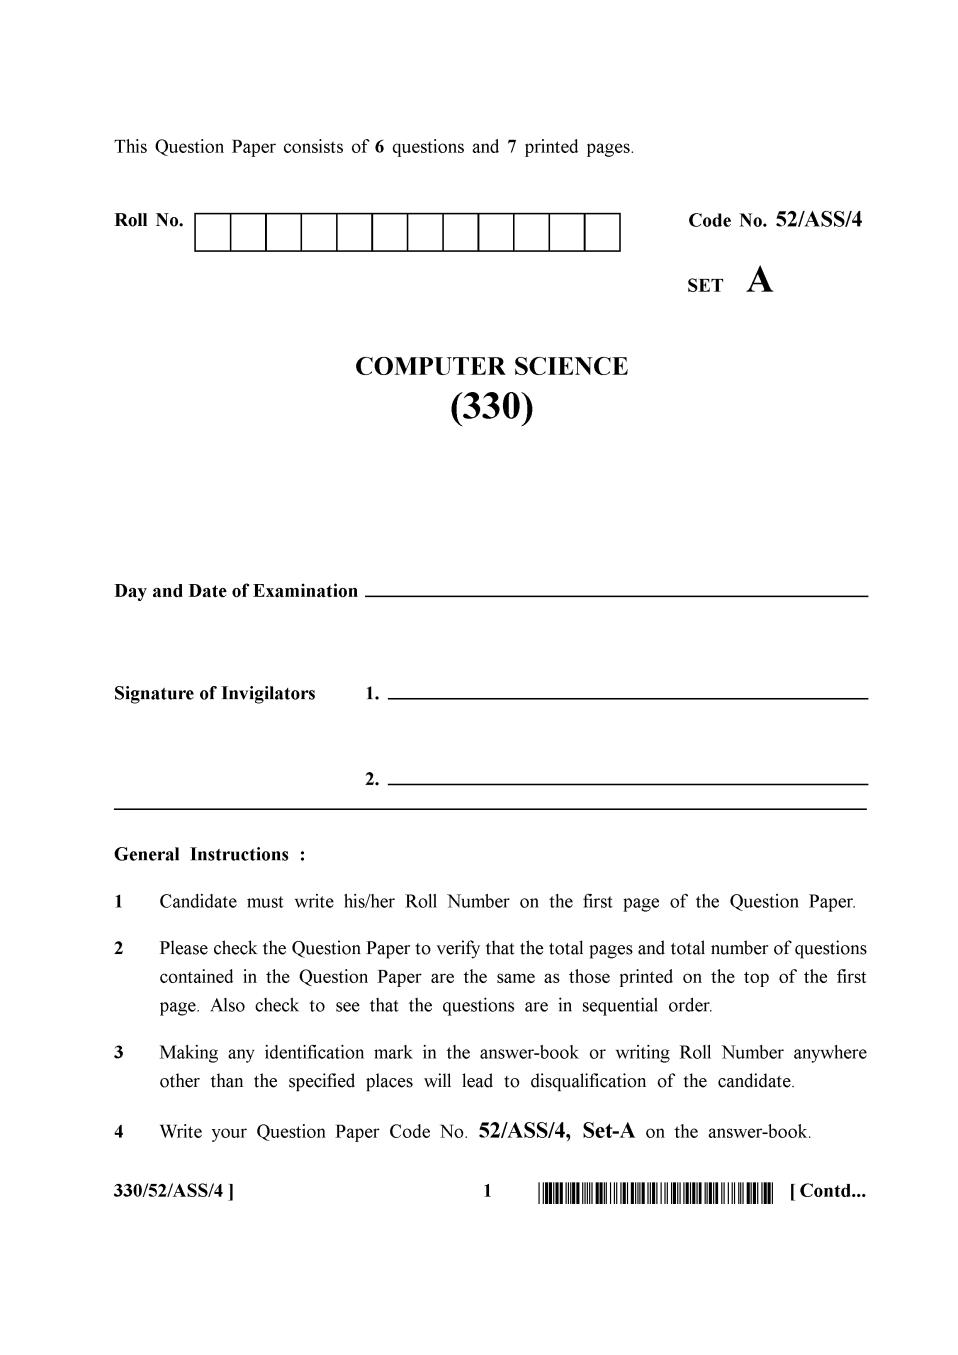 NIOS Class 12 Question Paper Apr 2016 - Computer Science - Page 1